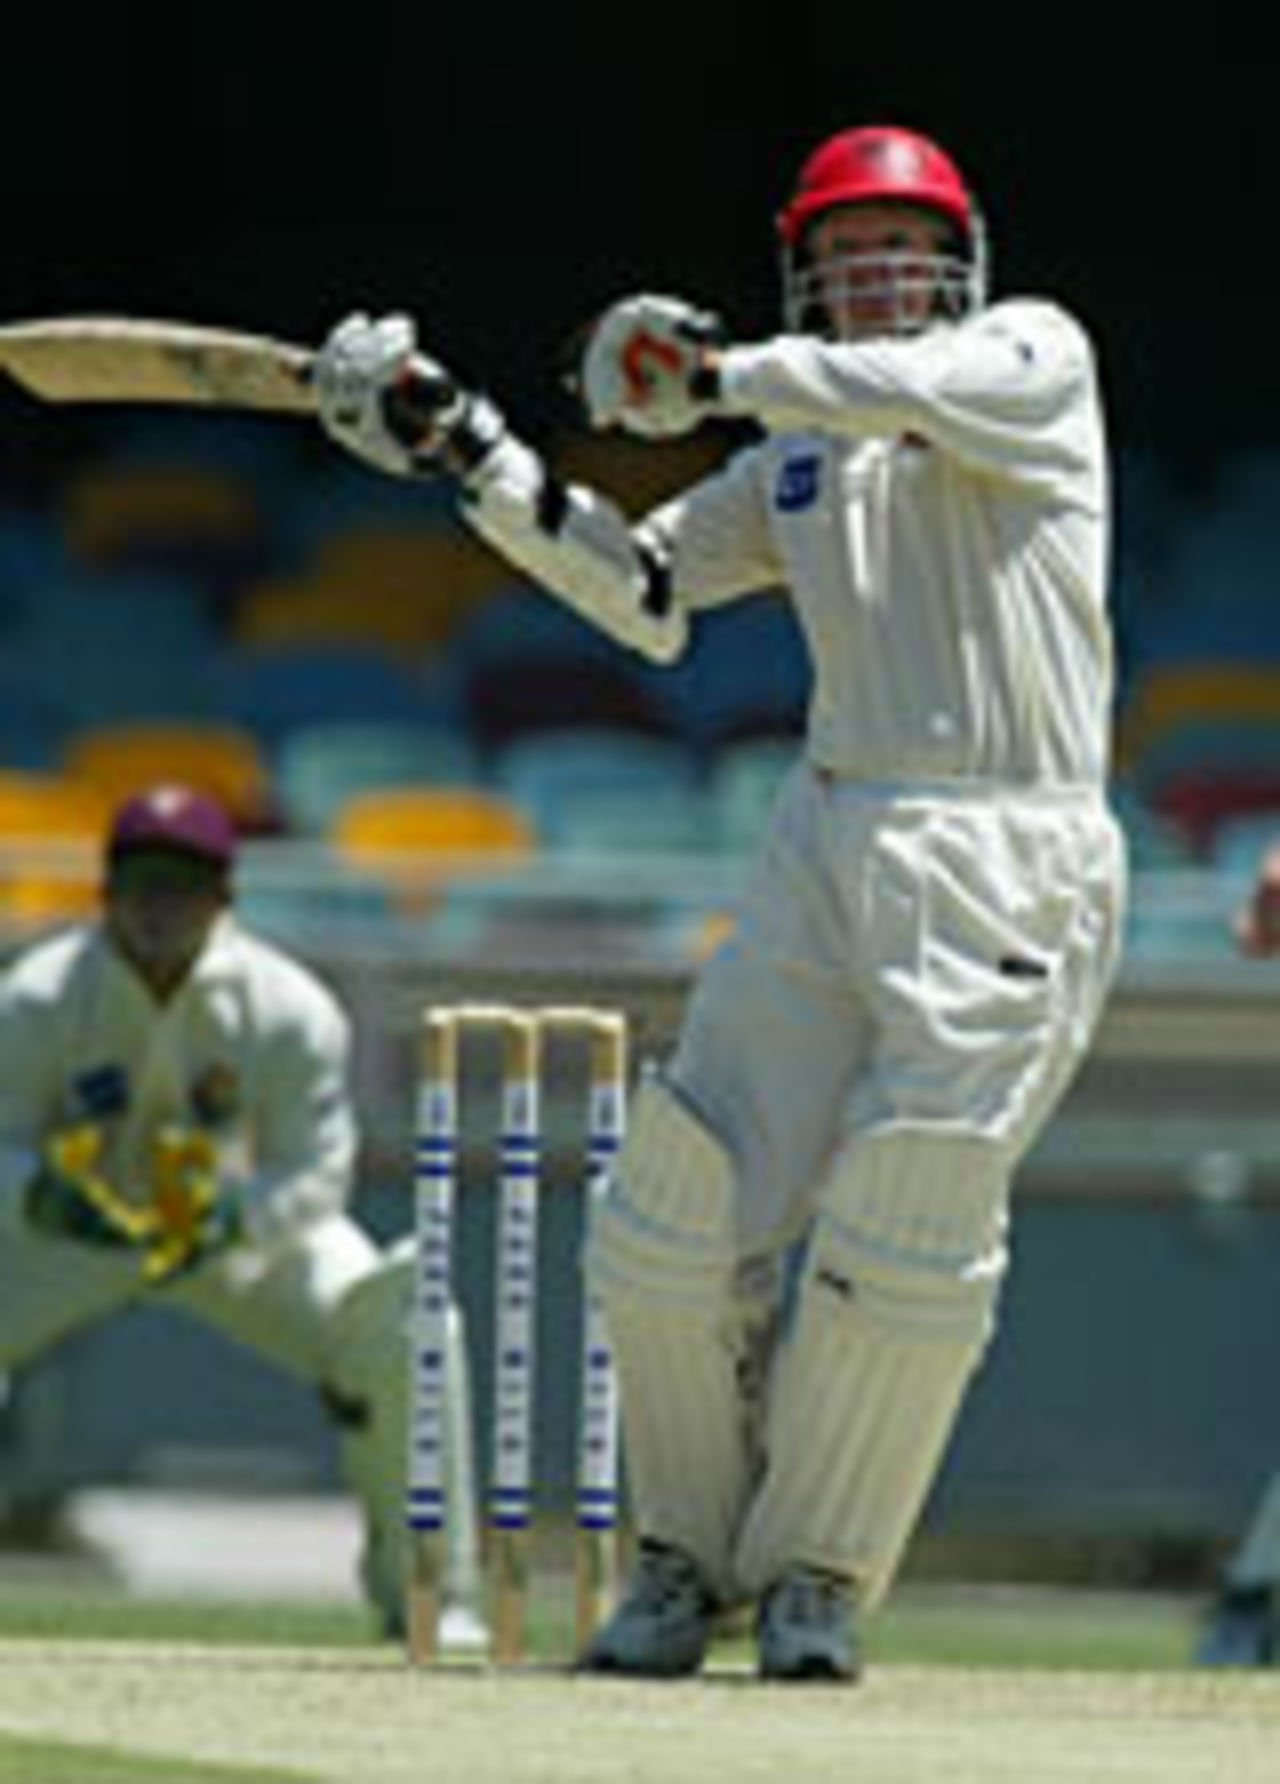 Shane Deitz feels the heat on his way to a top-score 74 , Queensland v South Australia, Sydney, December 19, 2003